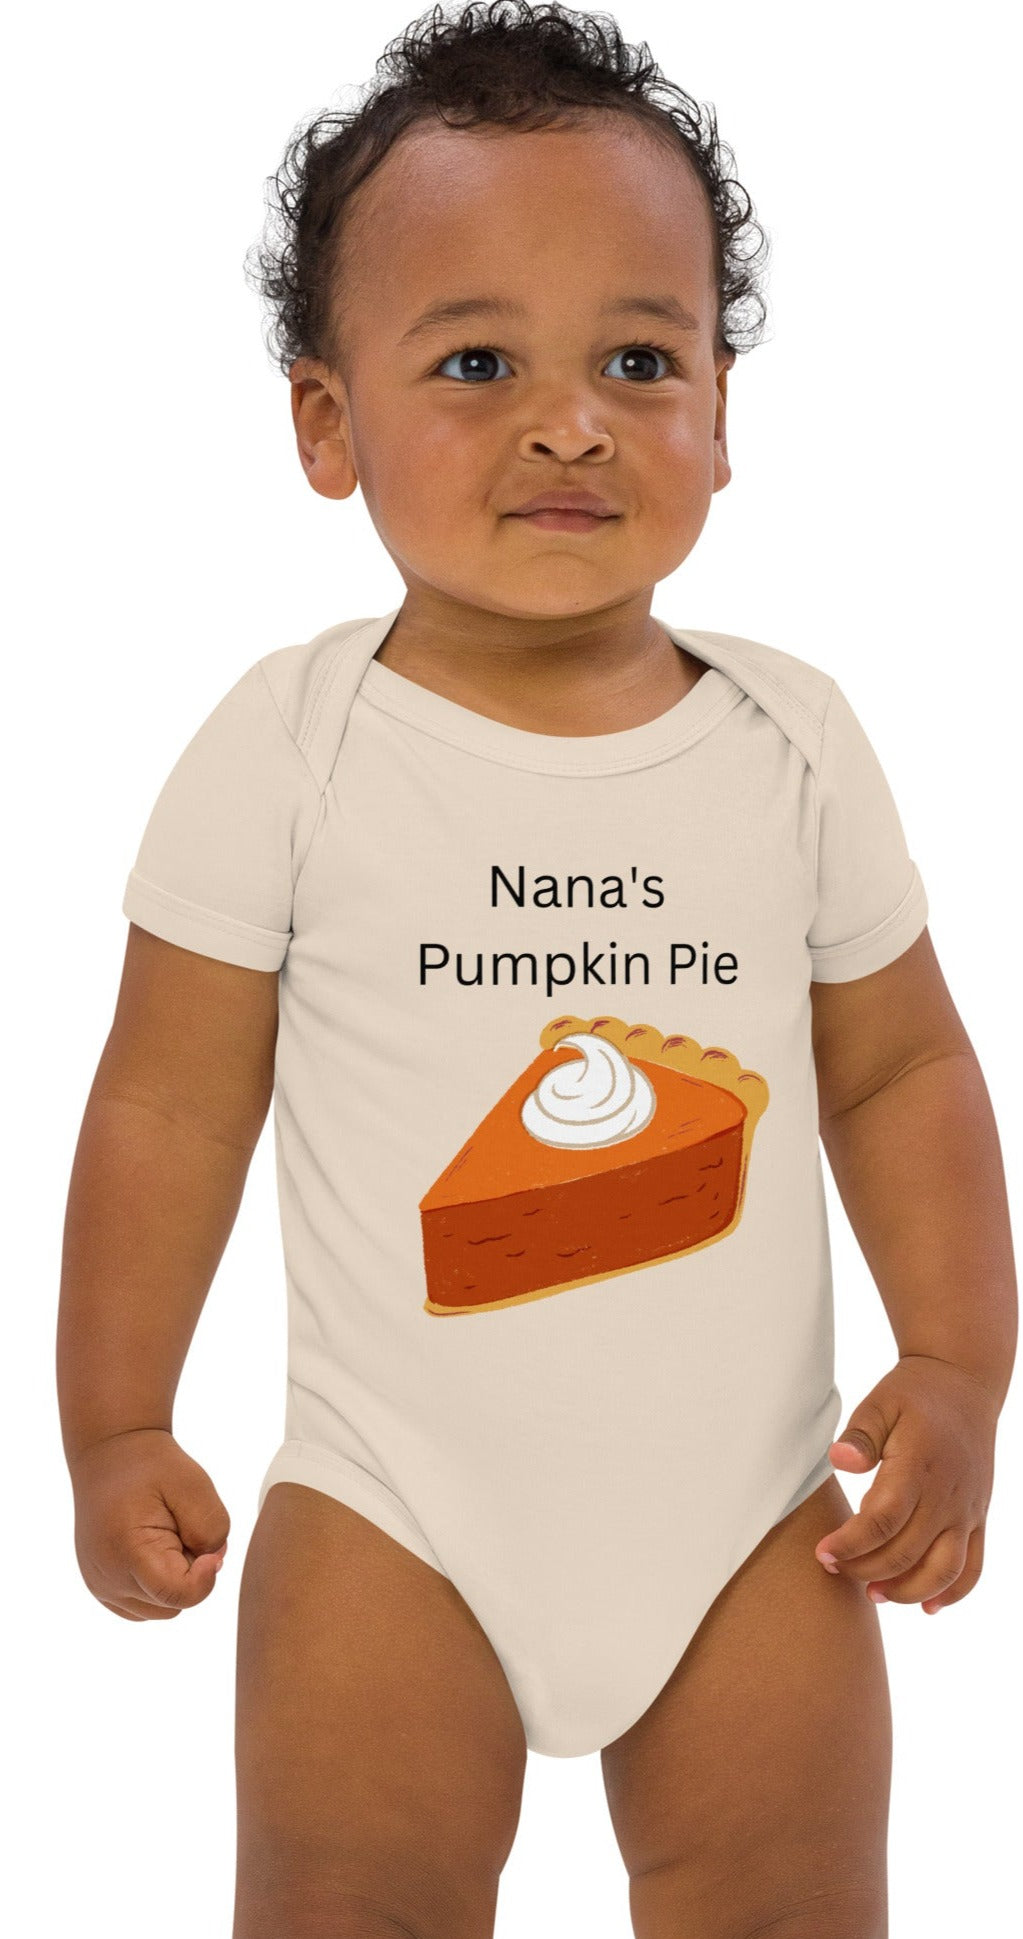 Nana's Pumpkin Pie Organic Onesie